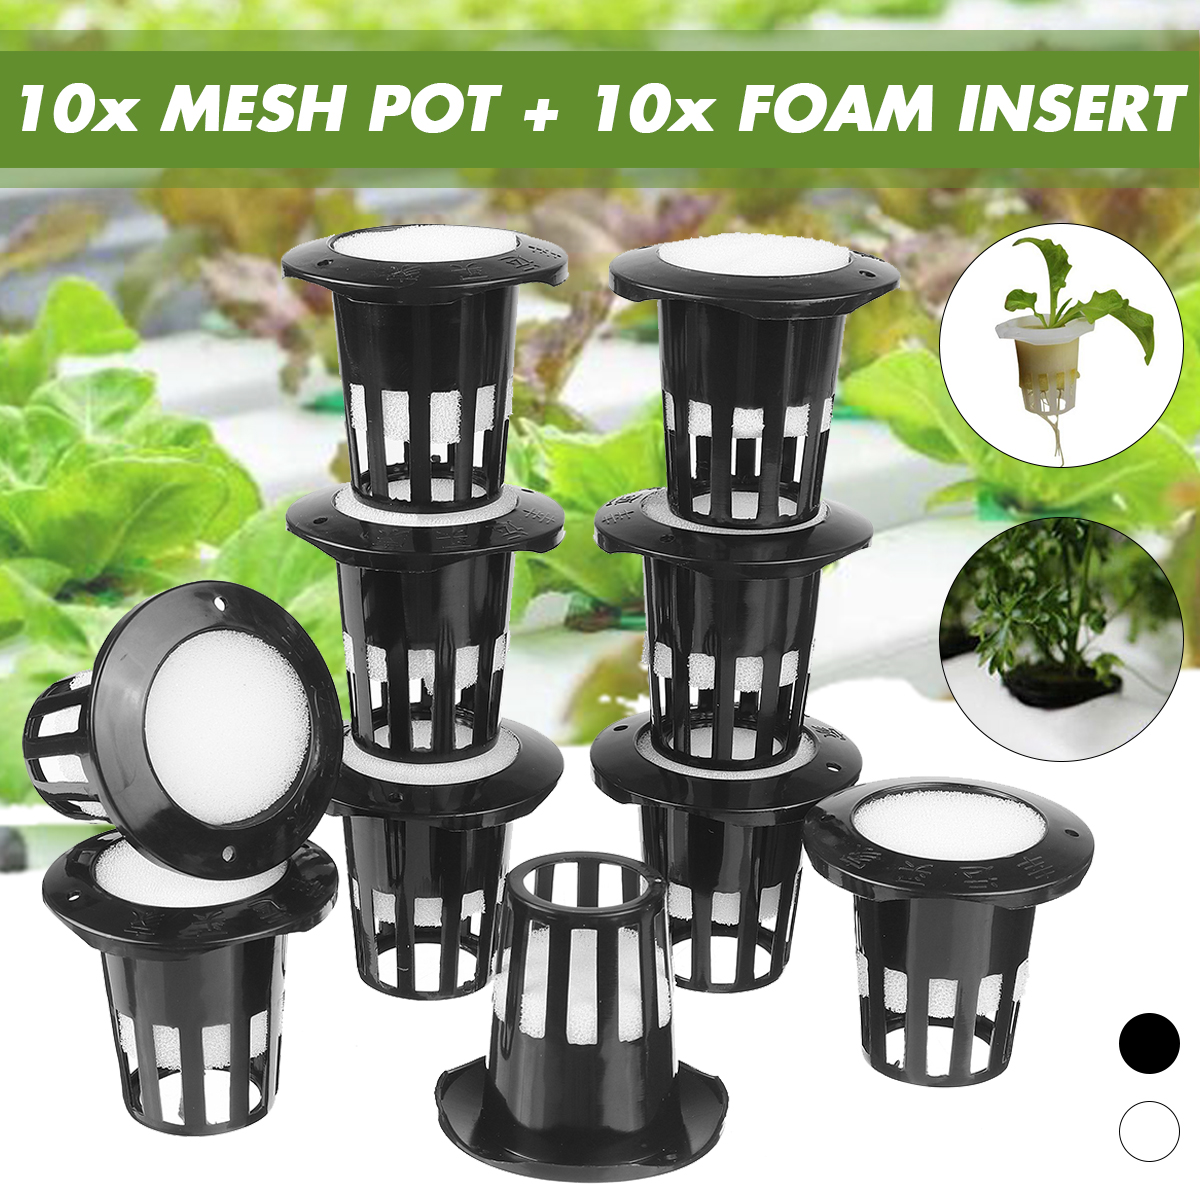 Mesh Pot Net Cup Basket Hydroponic System Garden Plant Cloning Foam Insert Seeds 